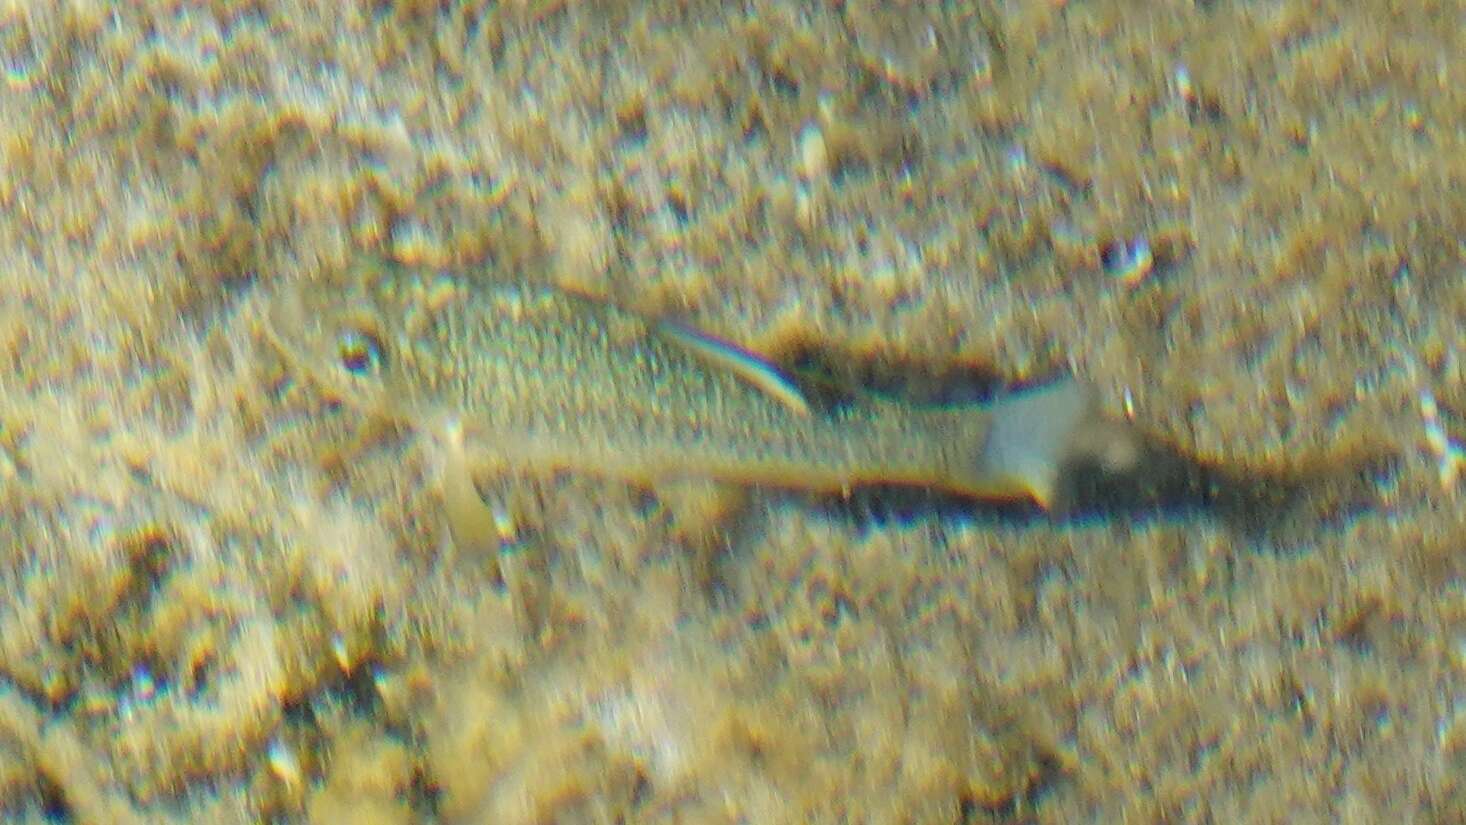 Image of Comanche Springs Pupfish